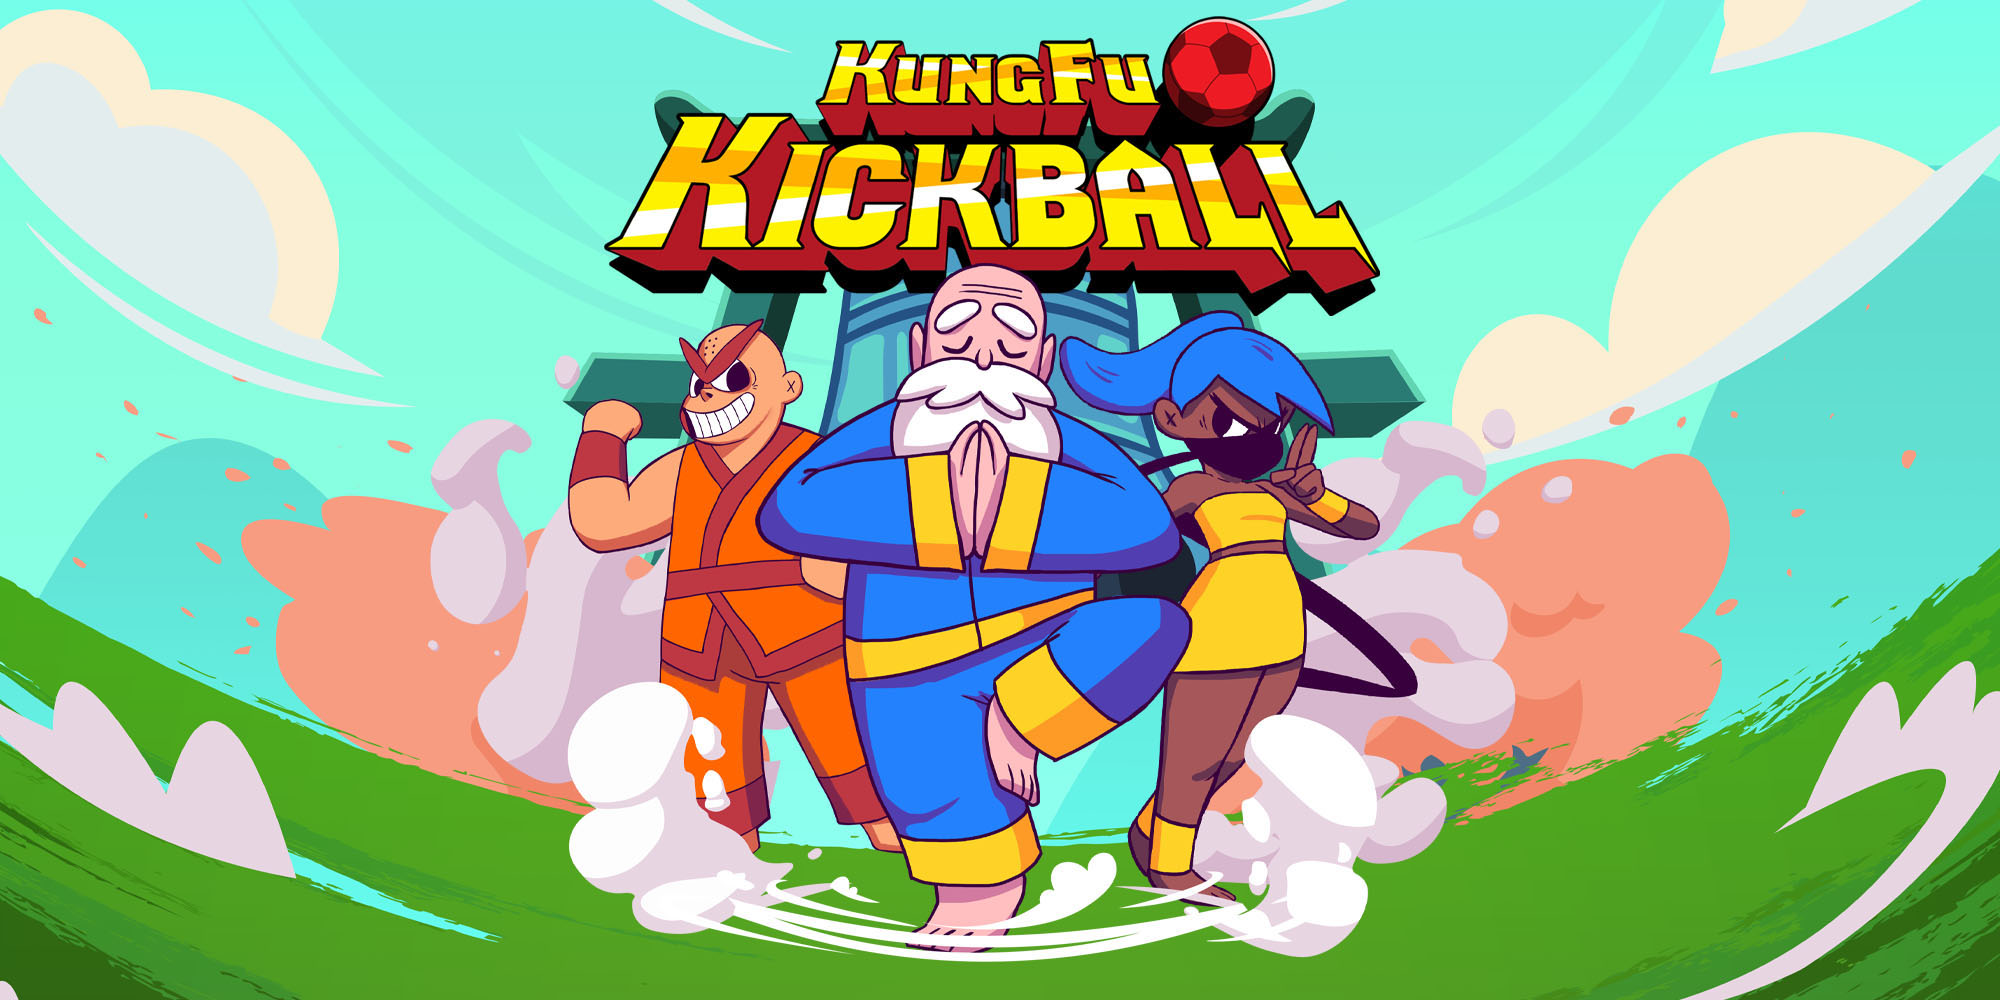 Kick the Ball - Jeux en ligne